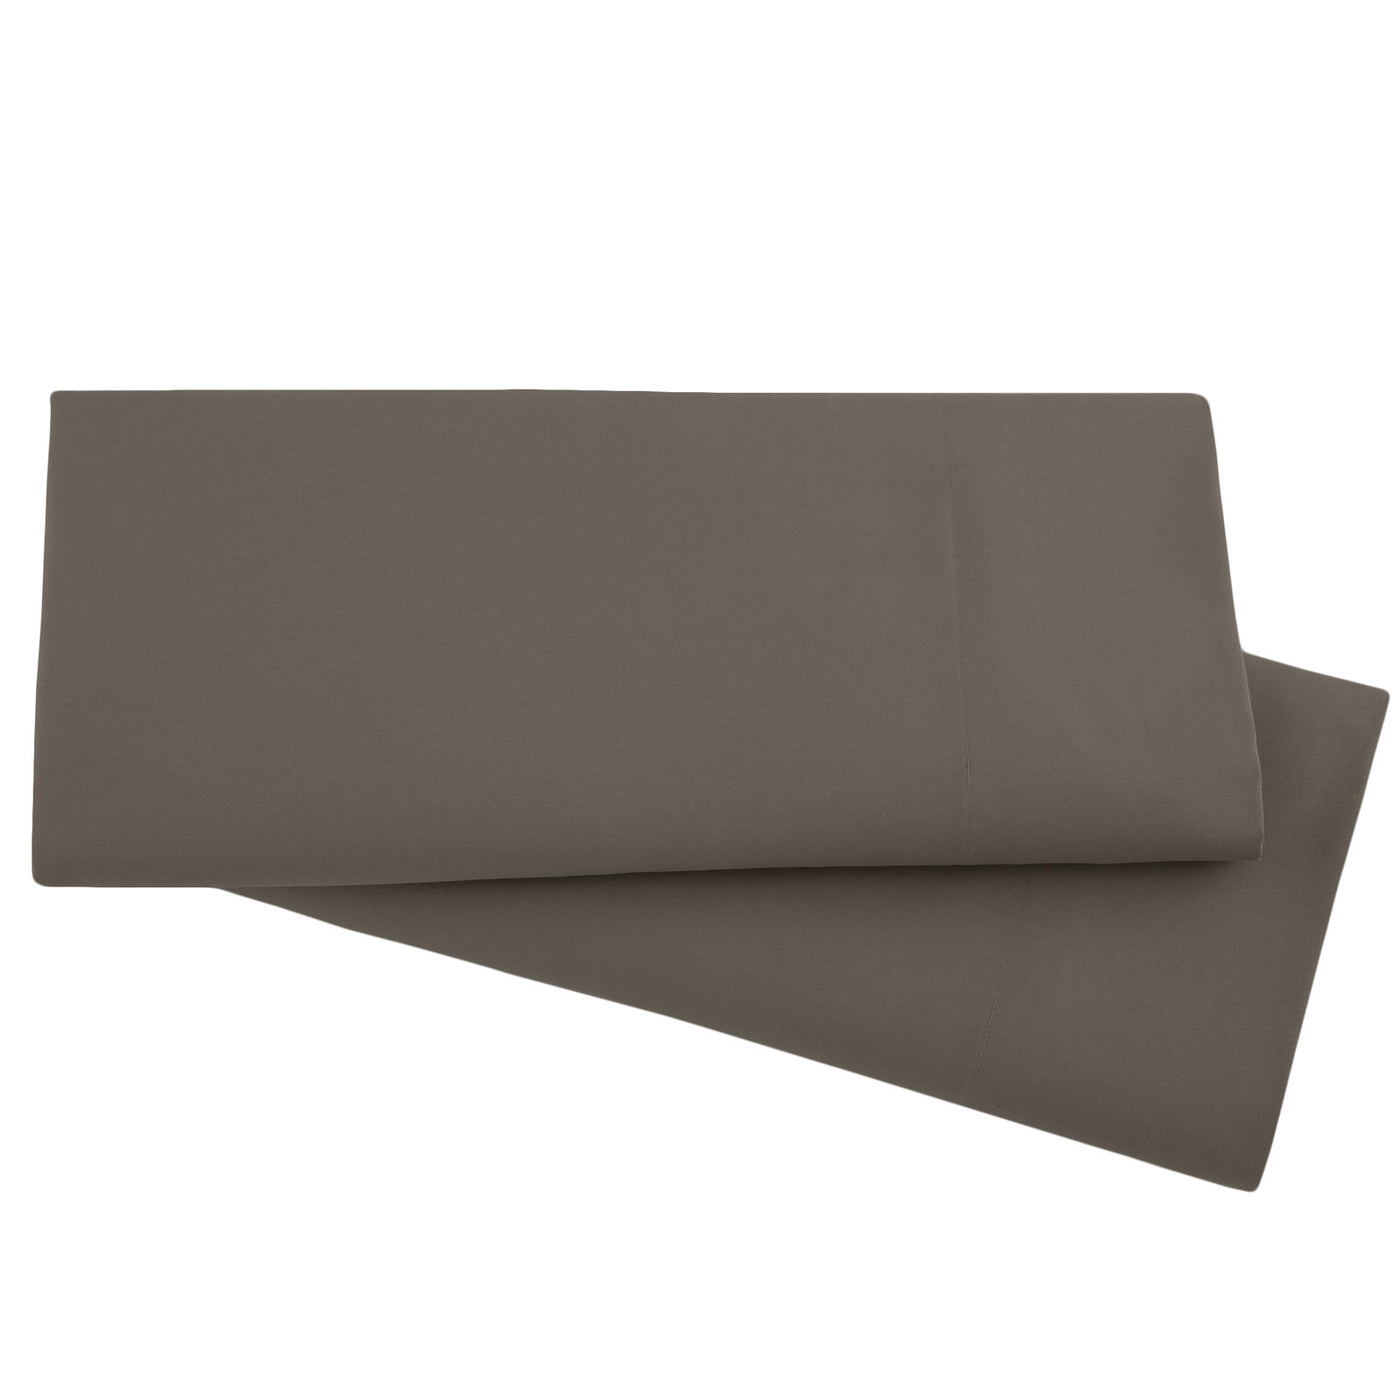 2-Piece Microfiber Pillowcase Set in Dark Taupe